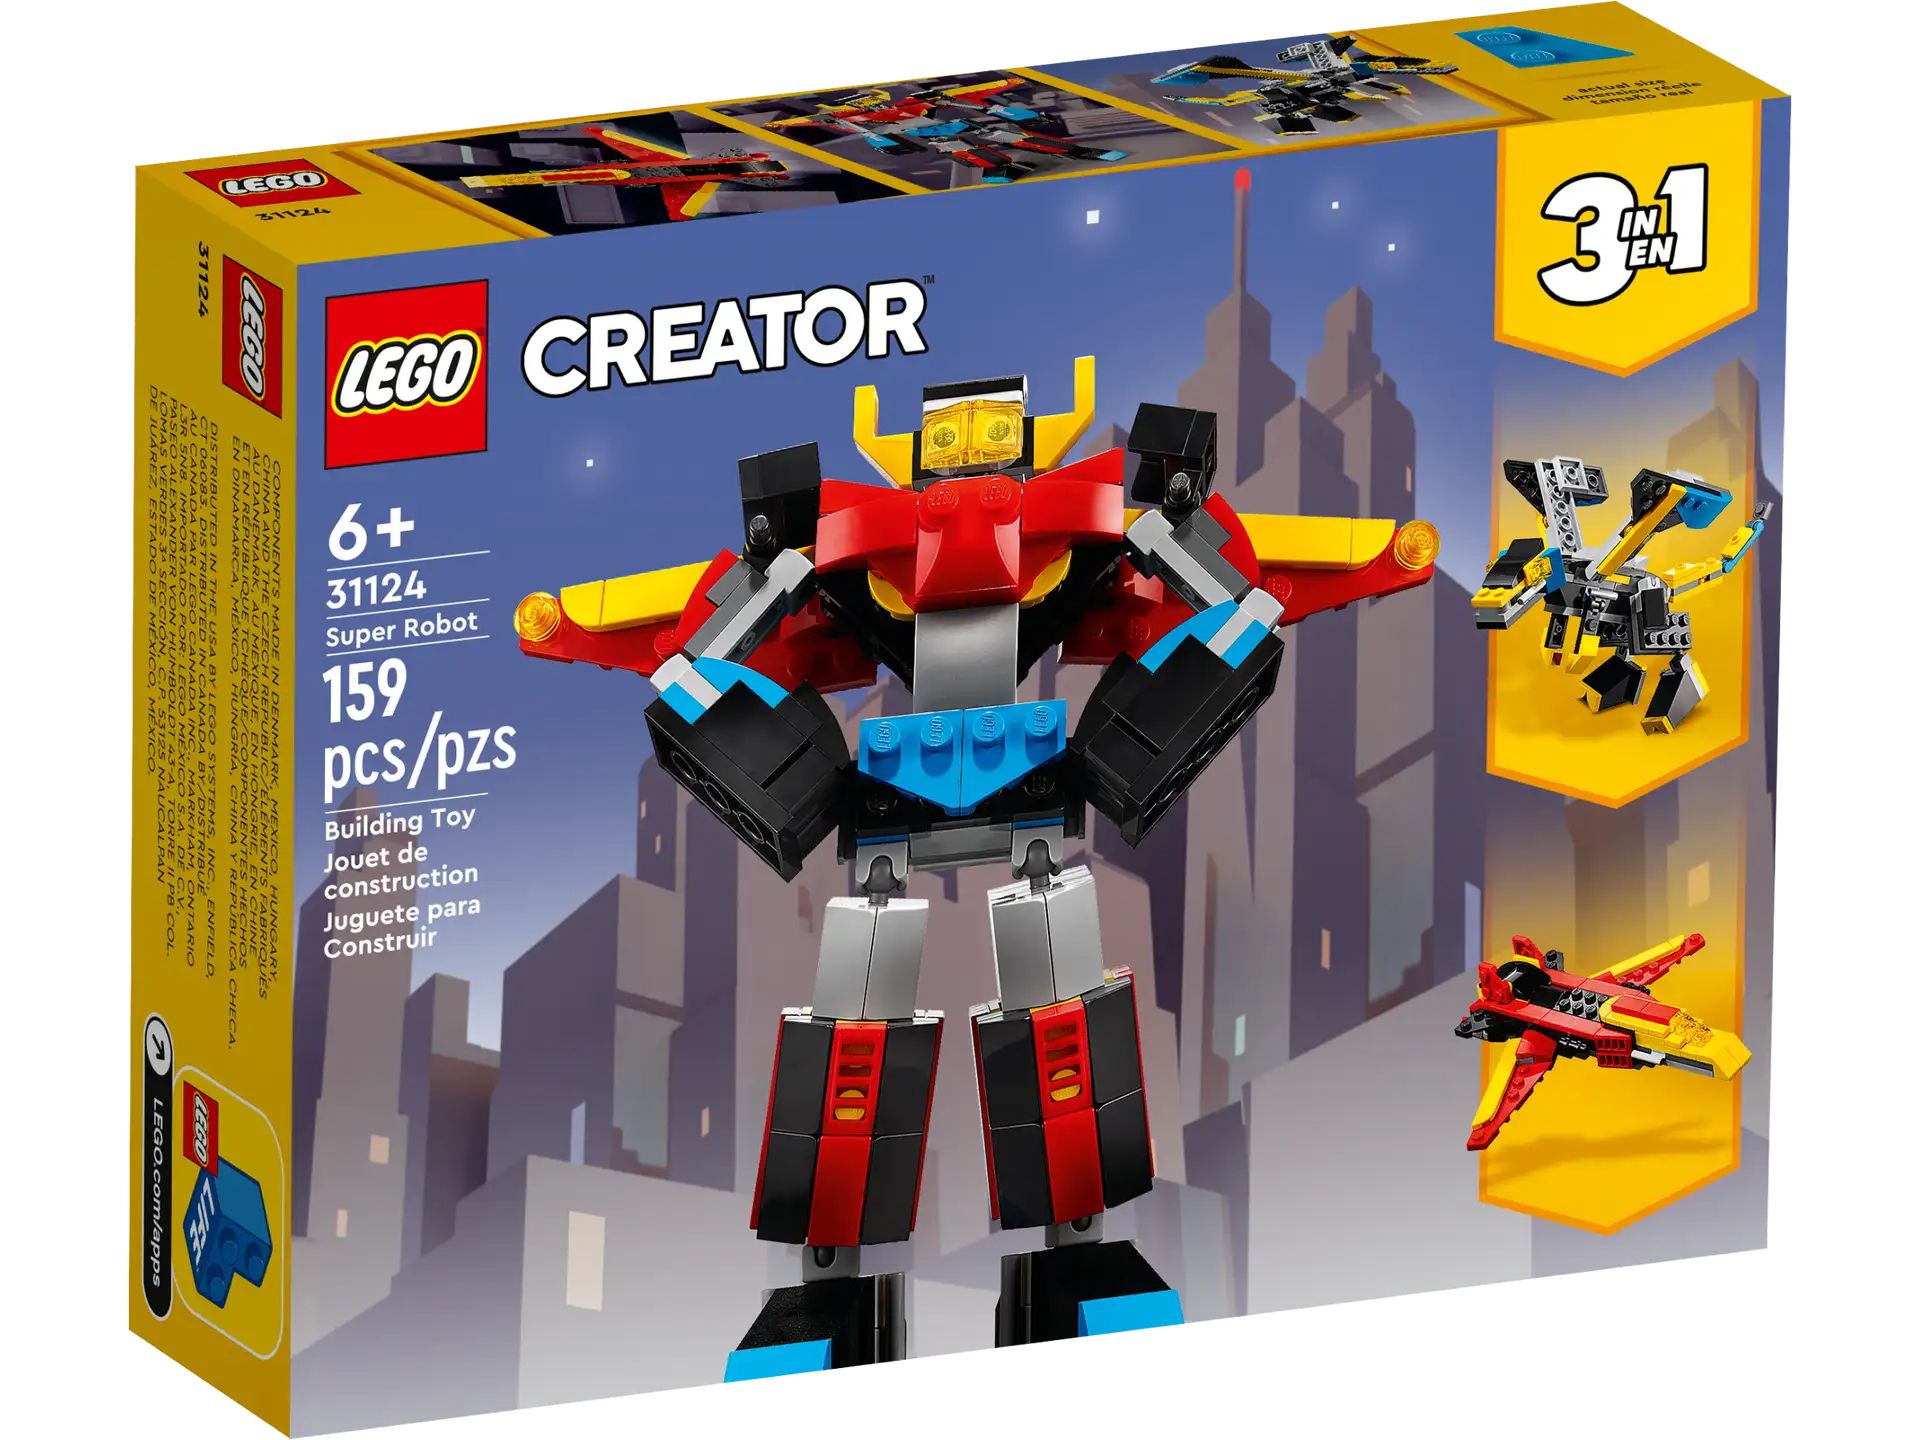 LEGO MINECRAFT 21240 - A AVENTURA NO PANTANO - TRENDS Brinquedos